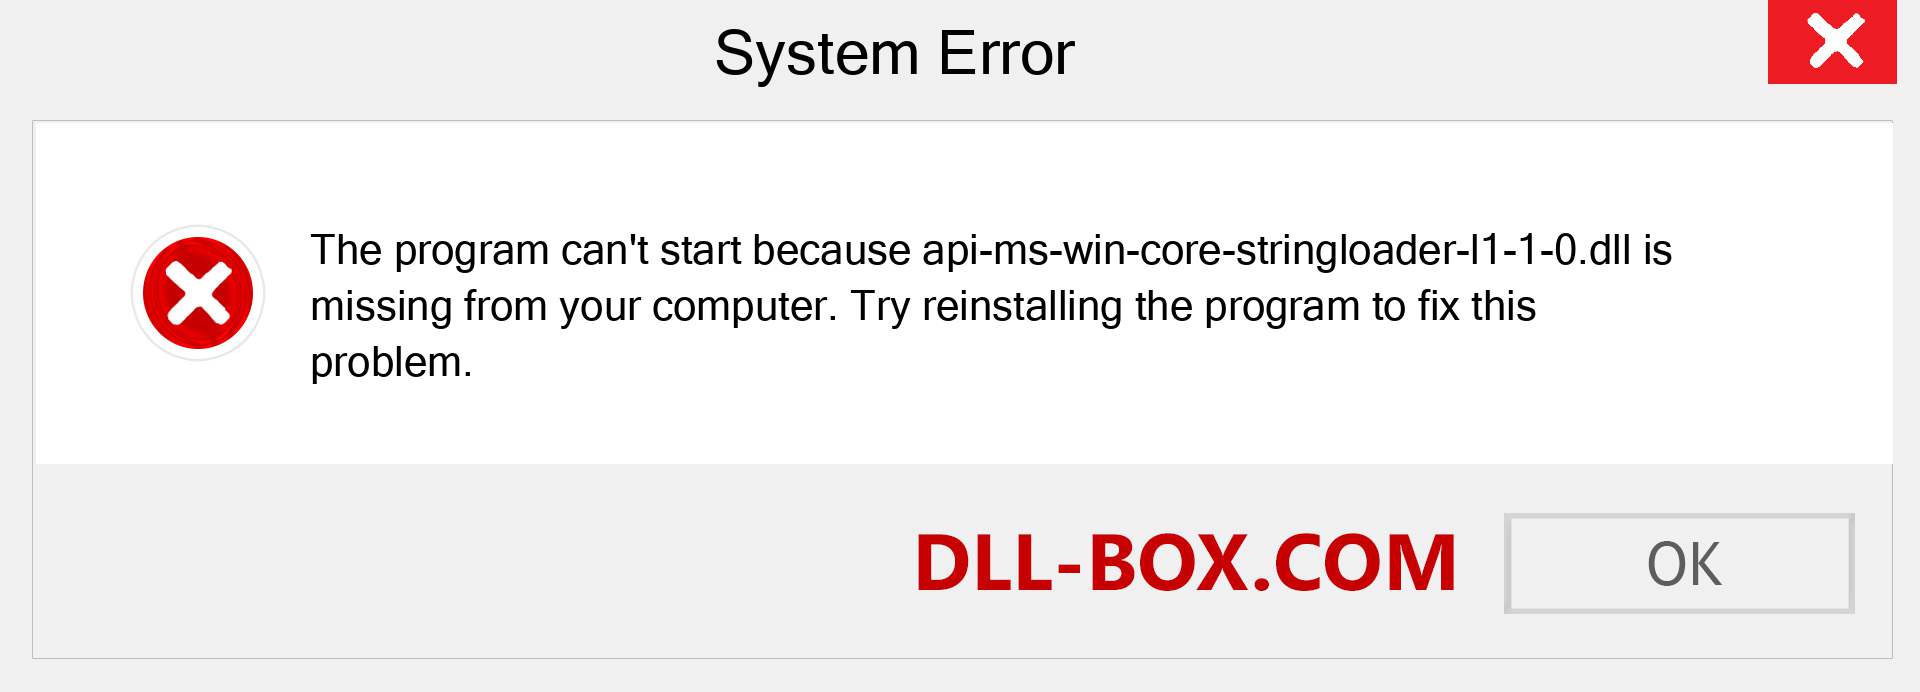  api-ms-win-core-stringloader-l1-1-0.dll file is missing?. Download for Windows 7, 8, 10 - Fix  api-ms-win-core-stringloader-l1-1-0 dll Missing Error on Windows, photos, images